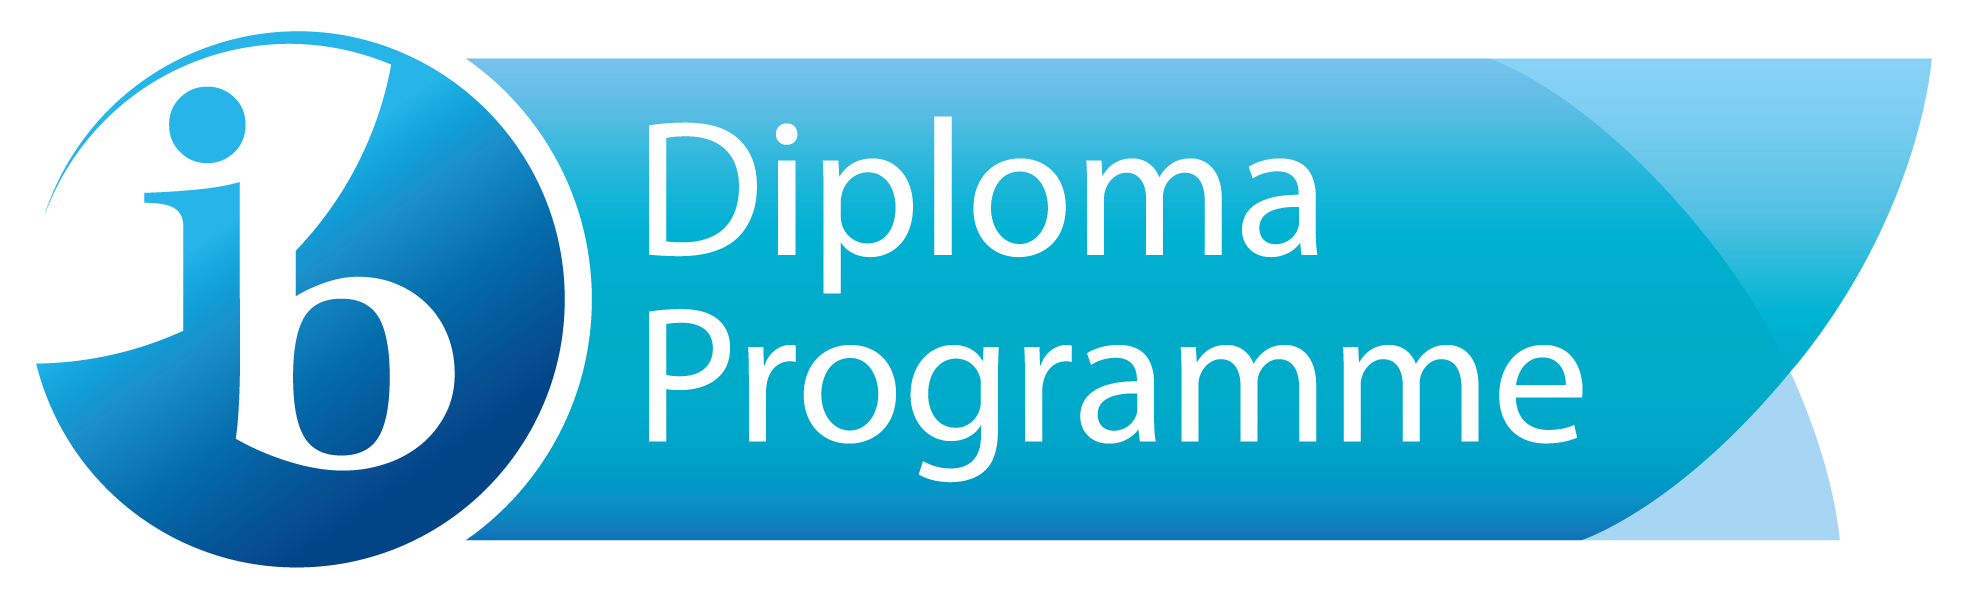 IB Diploma Program banner logo